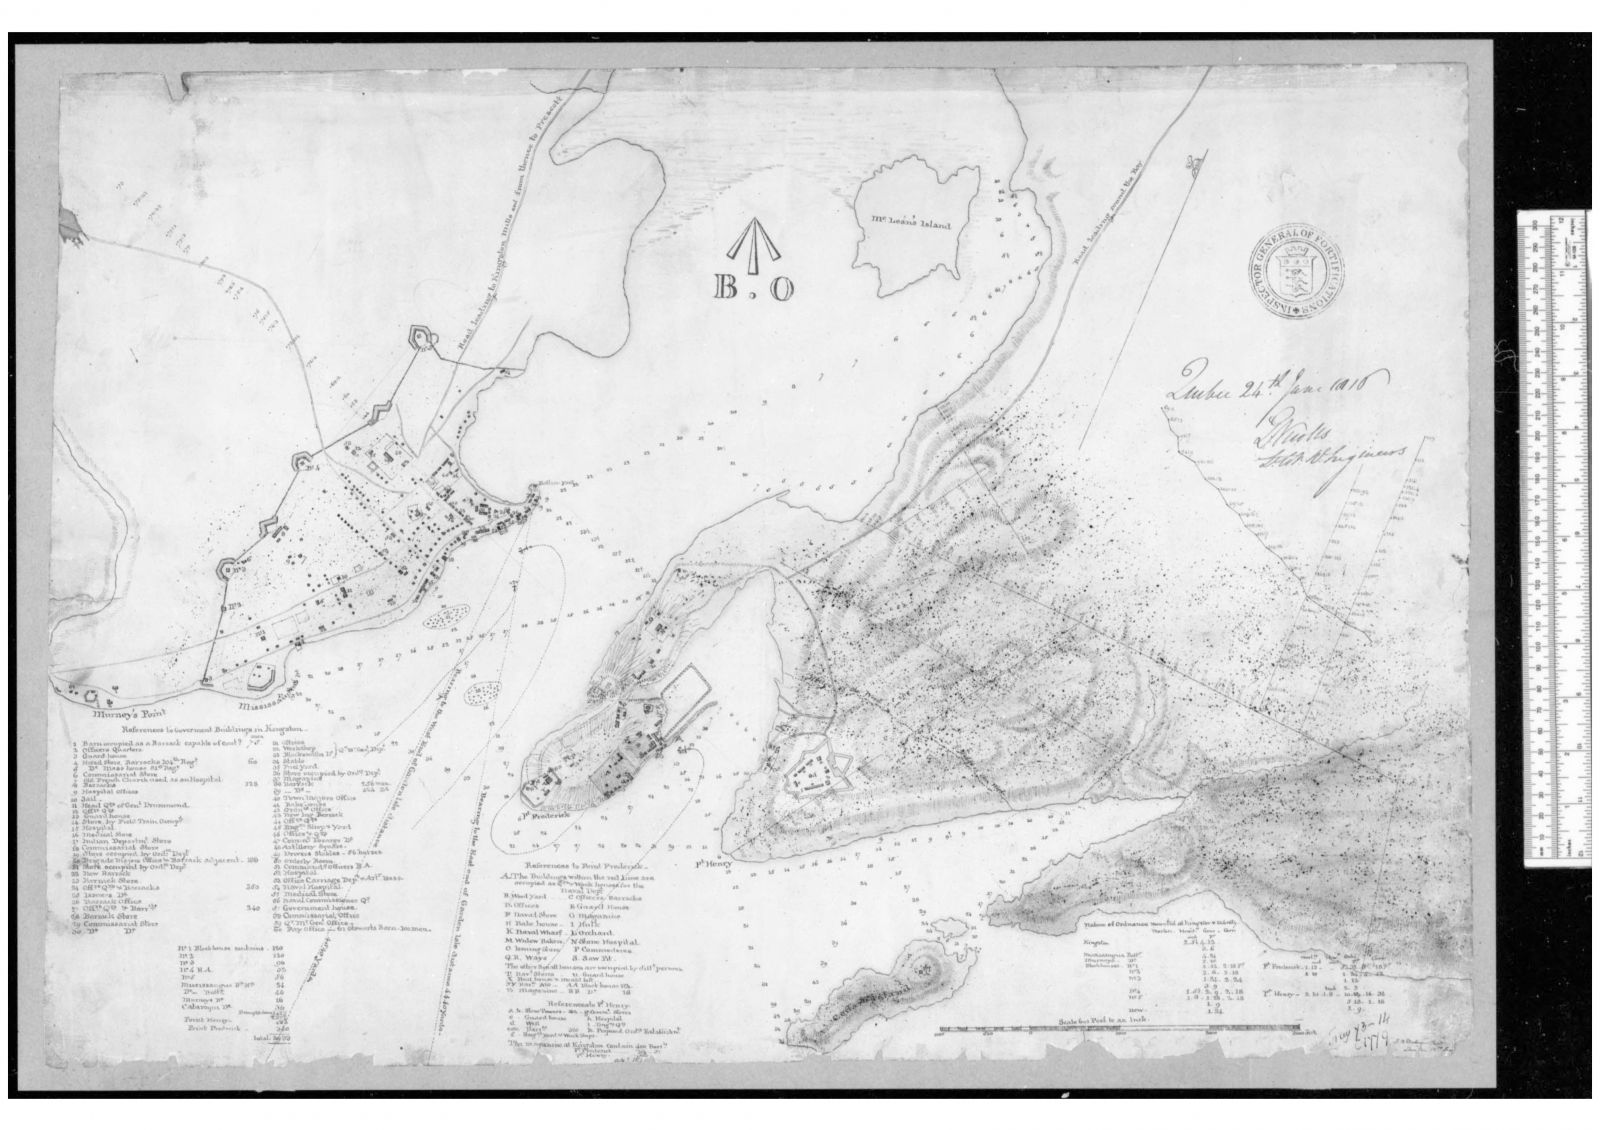 Map of Kingston, 1816